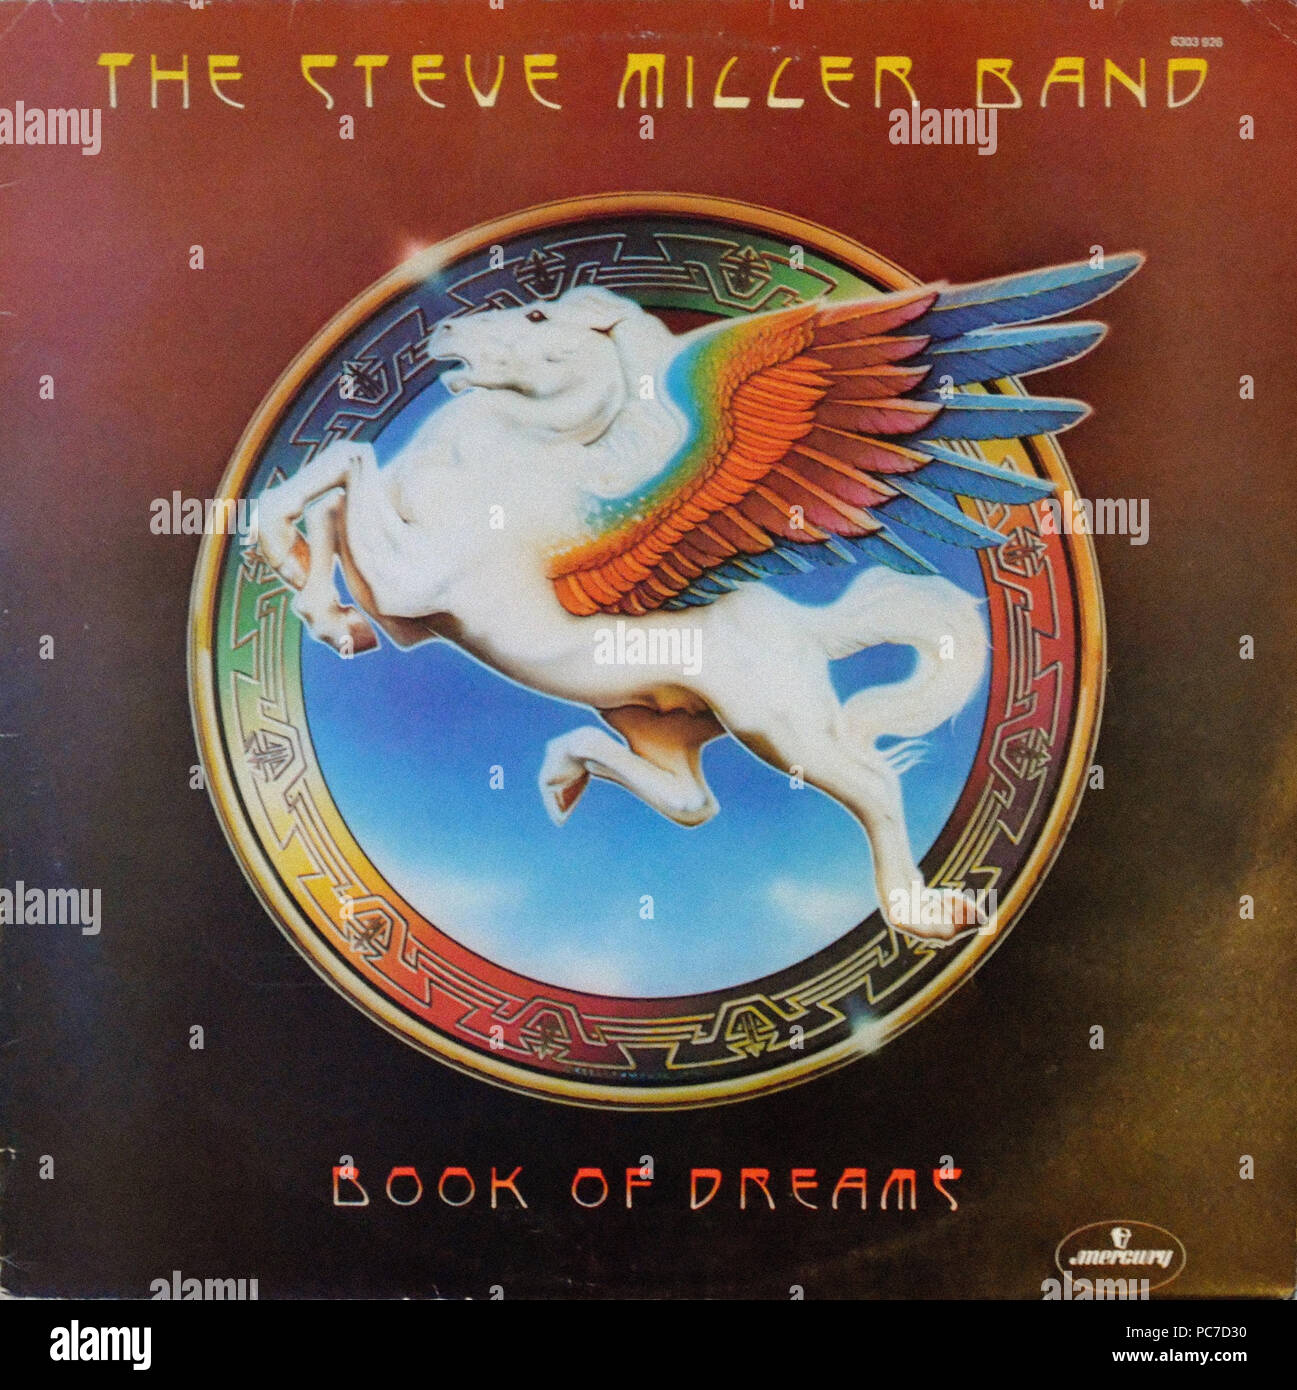 The Steve Miller Band - Book Of Dreams - Vintage vinyl album cover Stock  Photo - Alamy